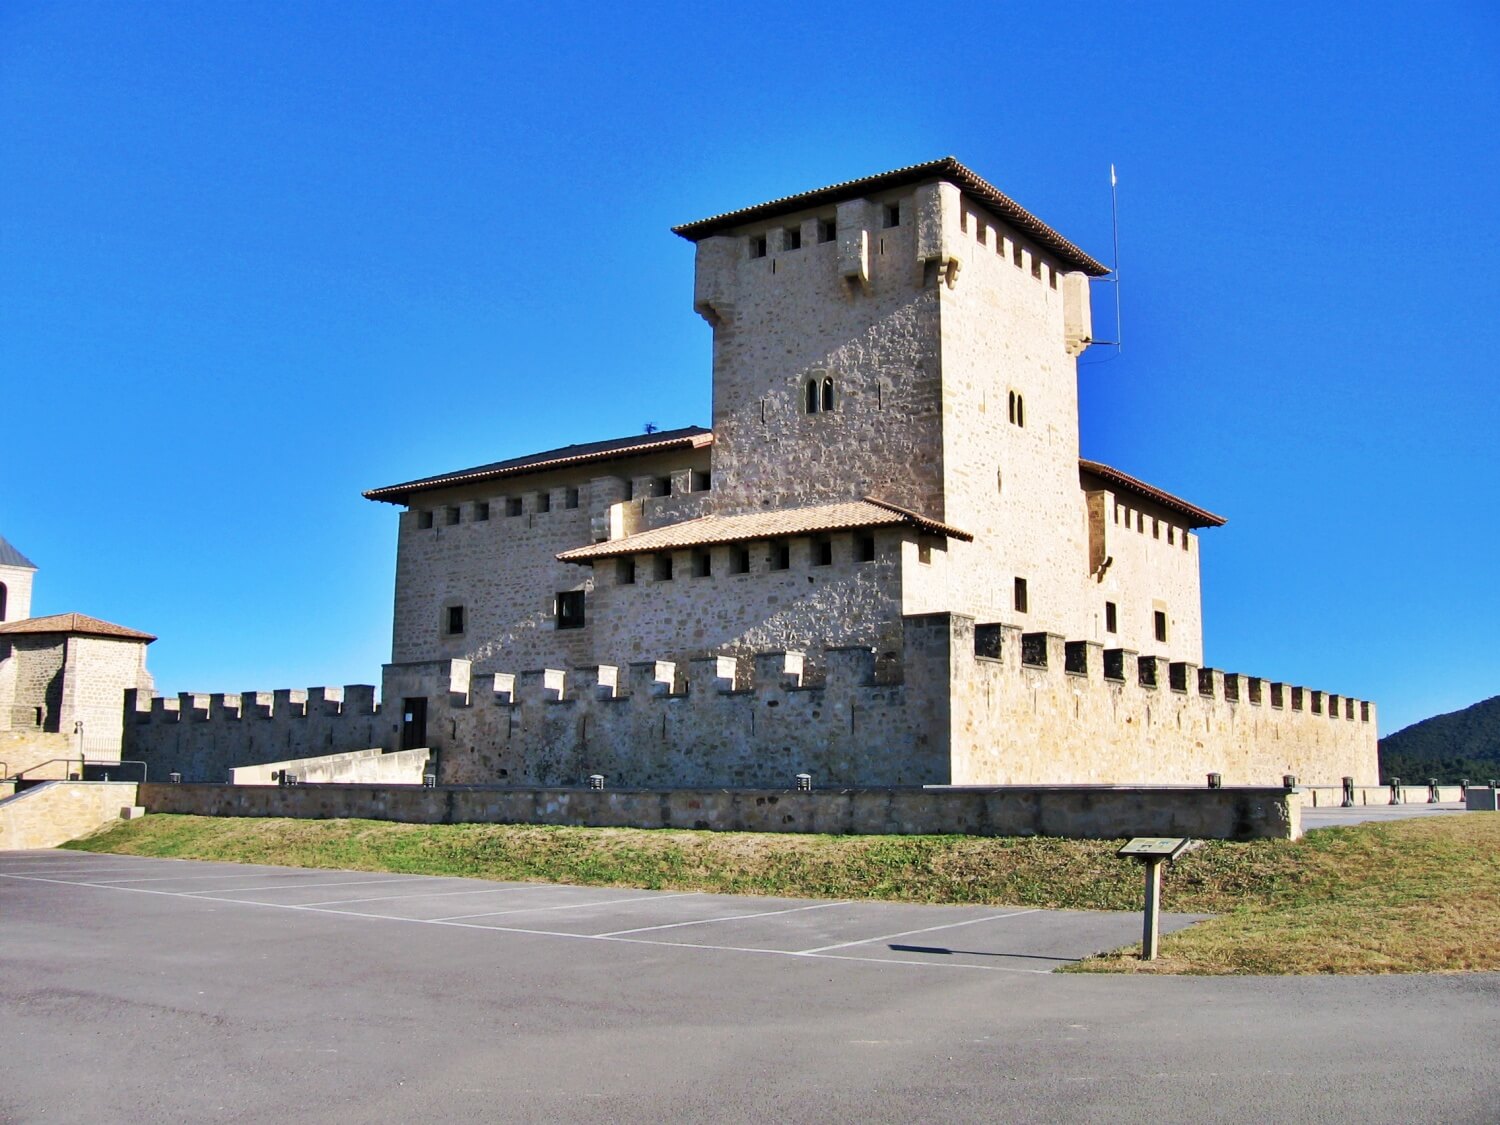 Tower of Villañañe